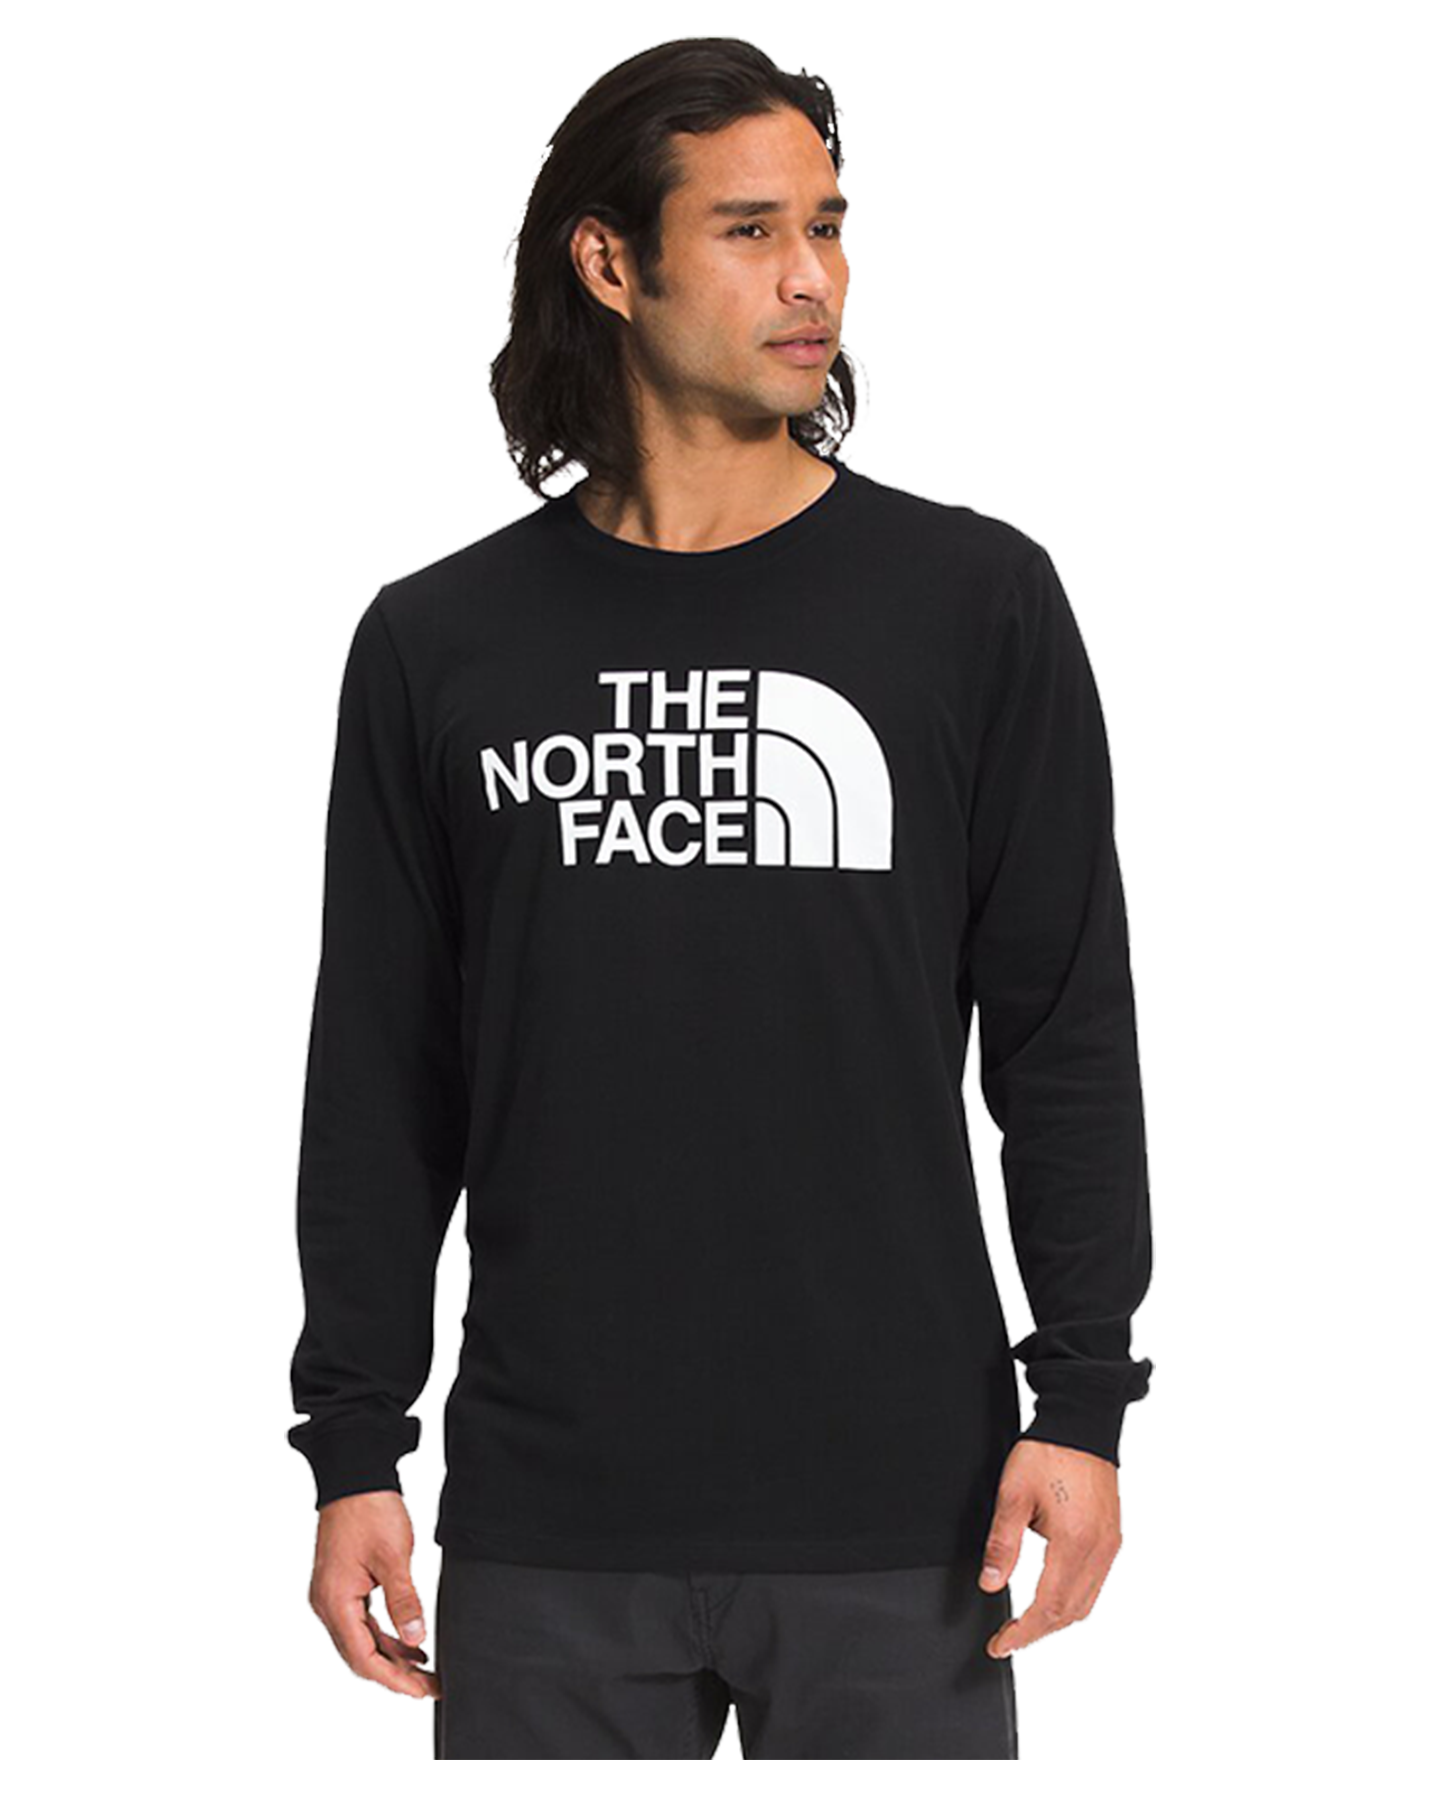 The North Face Men's L / S Half Dome Tee - TNF Black / TNF White Shirts & Tops - Trojan Wake Ski Snow